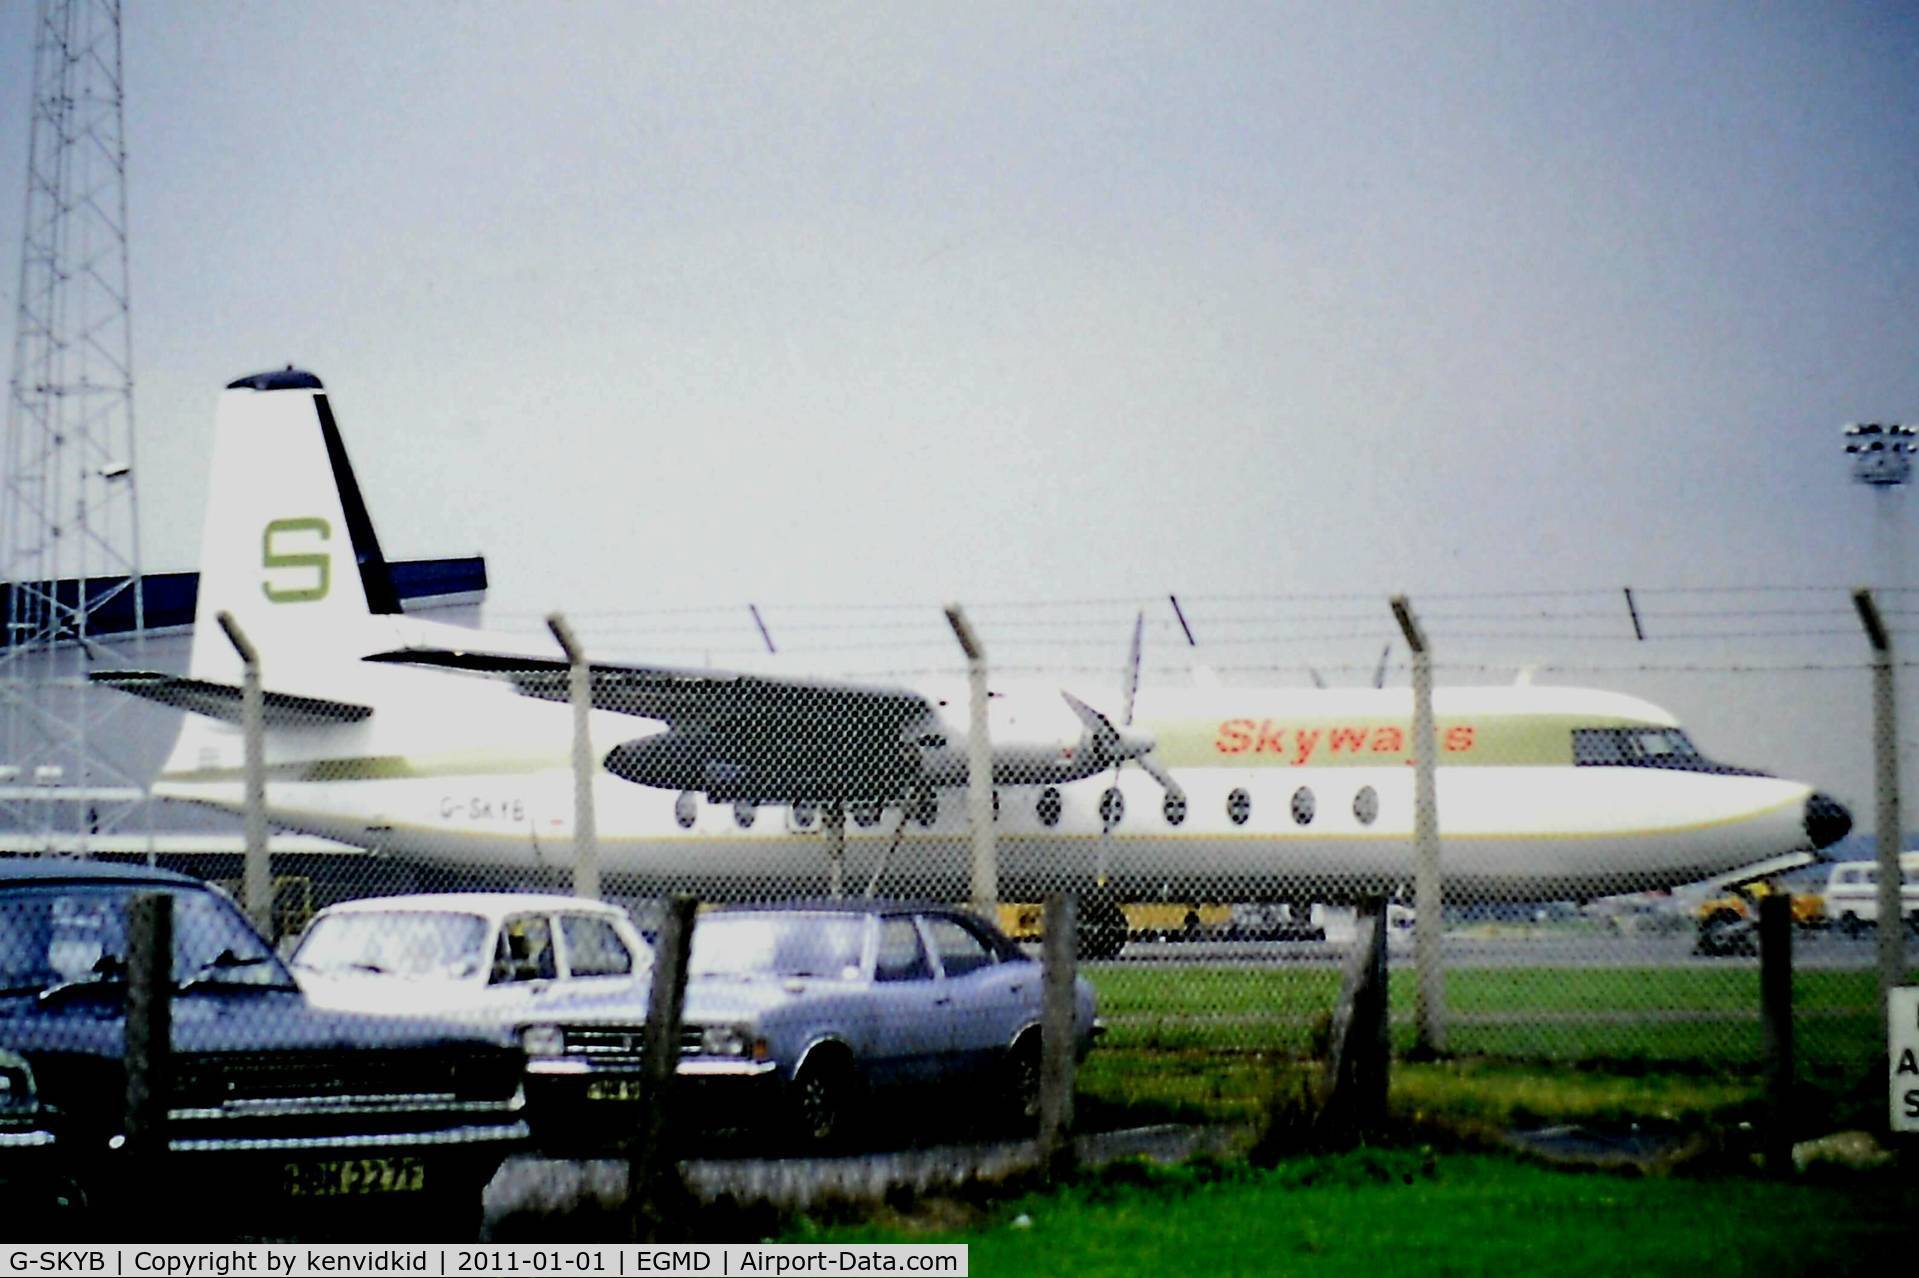 G-SKYB, 1967 Fairchild Hiller FH-227B C/N 539, At Lydd circa 1979. The cars date it.